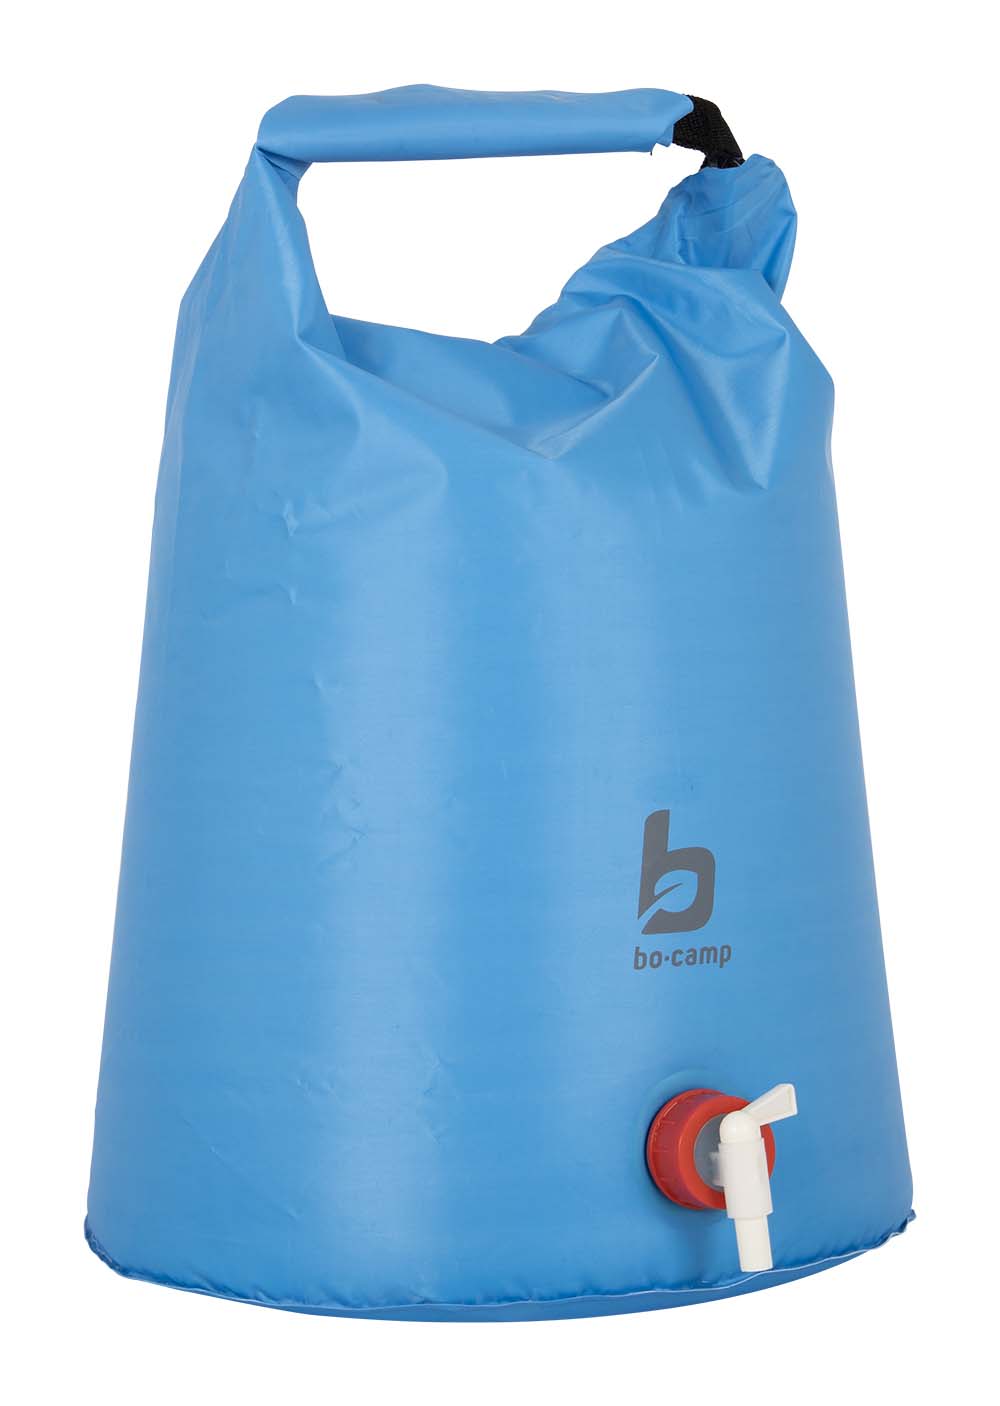 Bo-Camp - Aqua sac - With tab - Foldable - 20 Liters